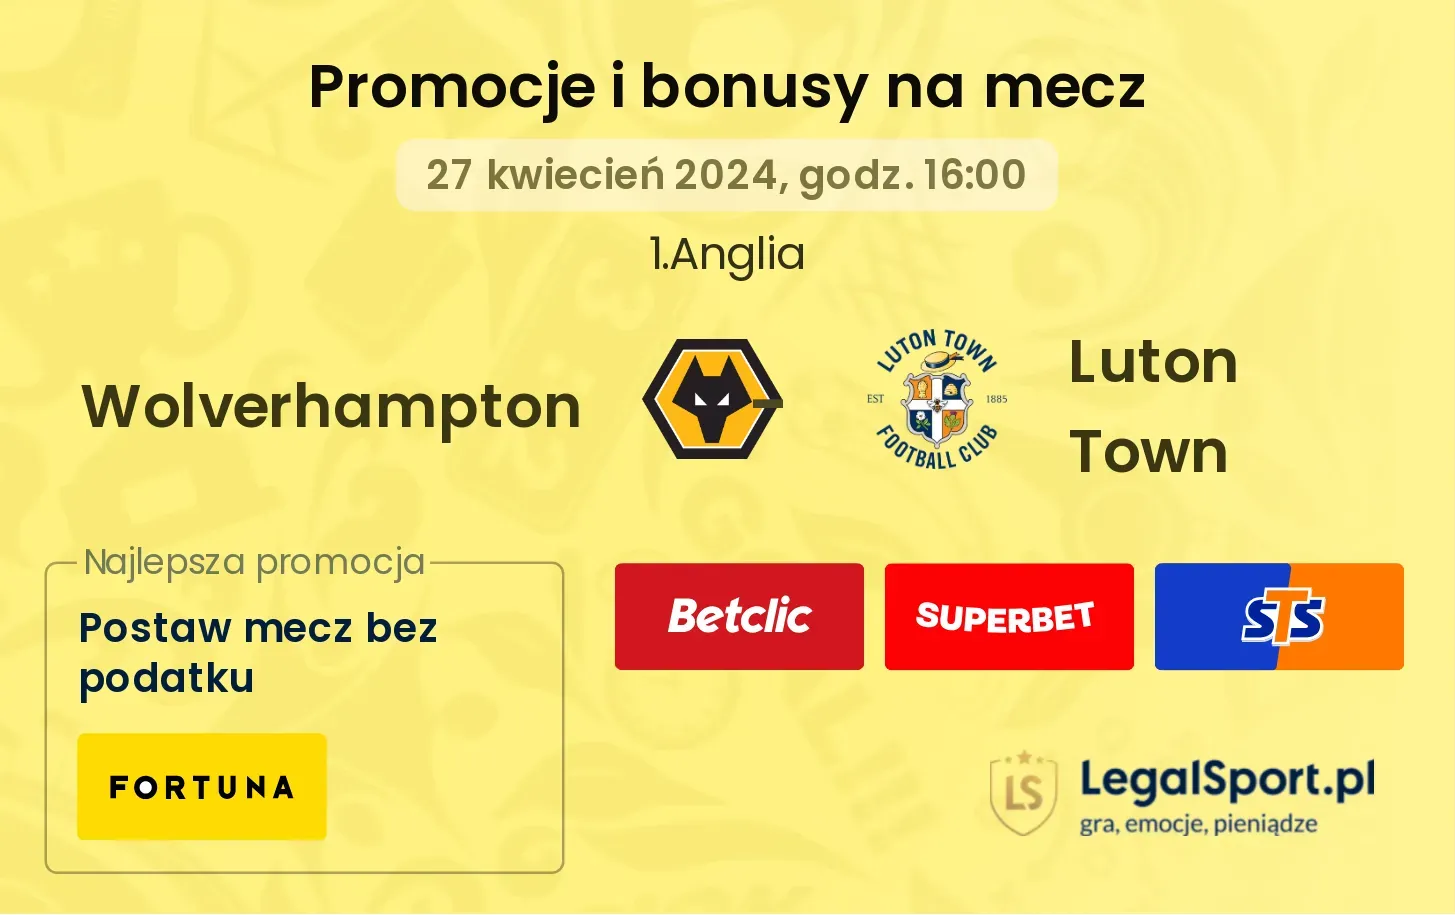 Wolverhampton - Luton Town promocje bonusy na mecz